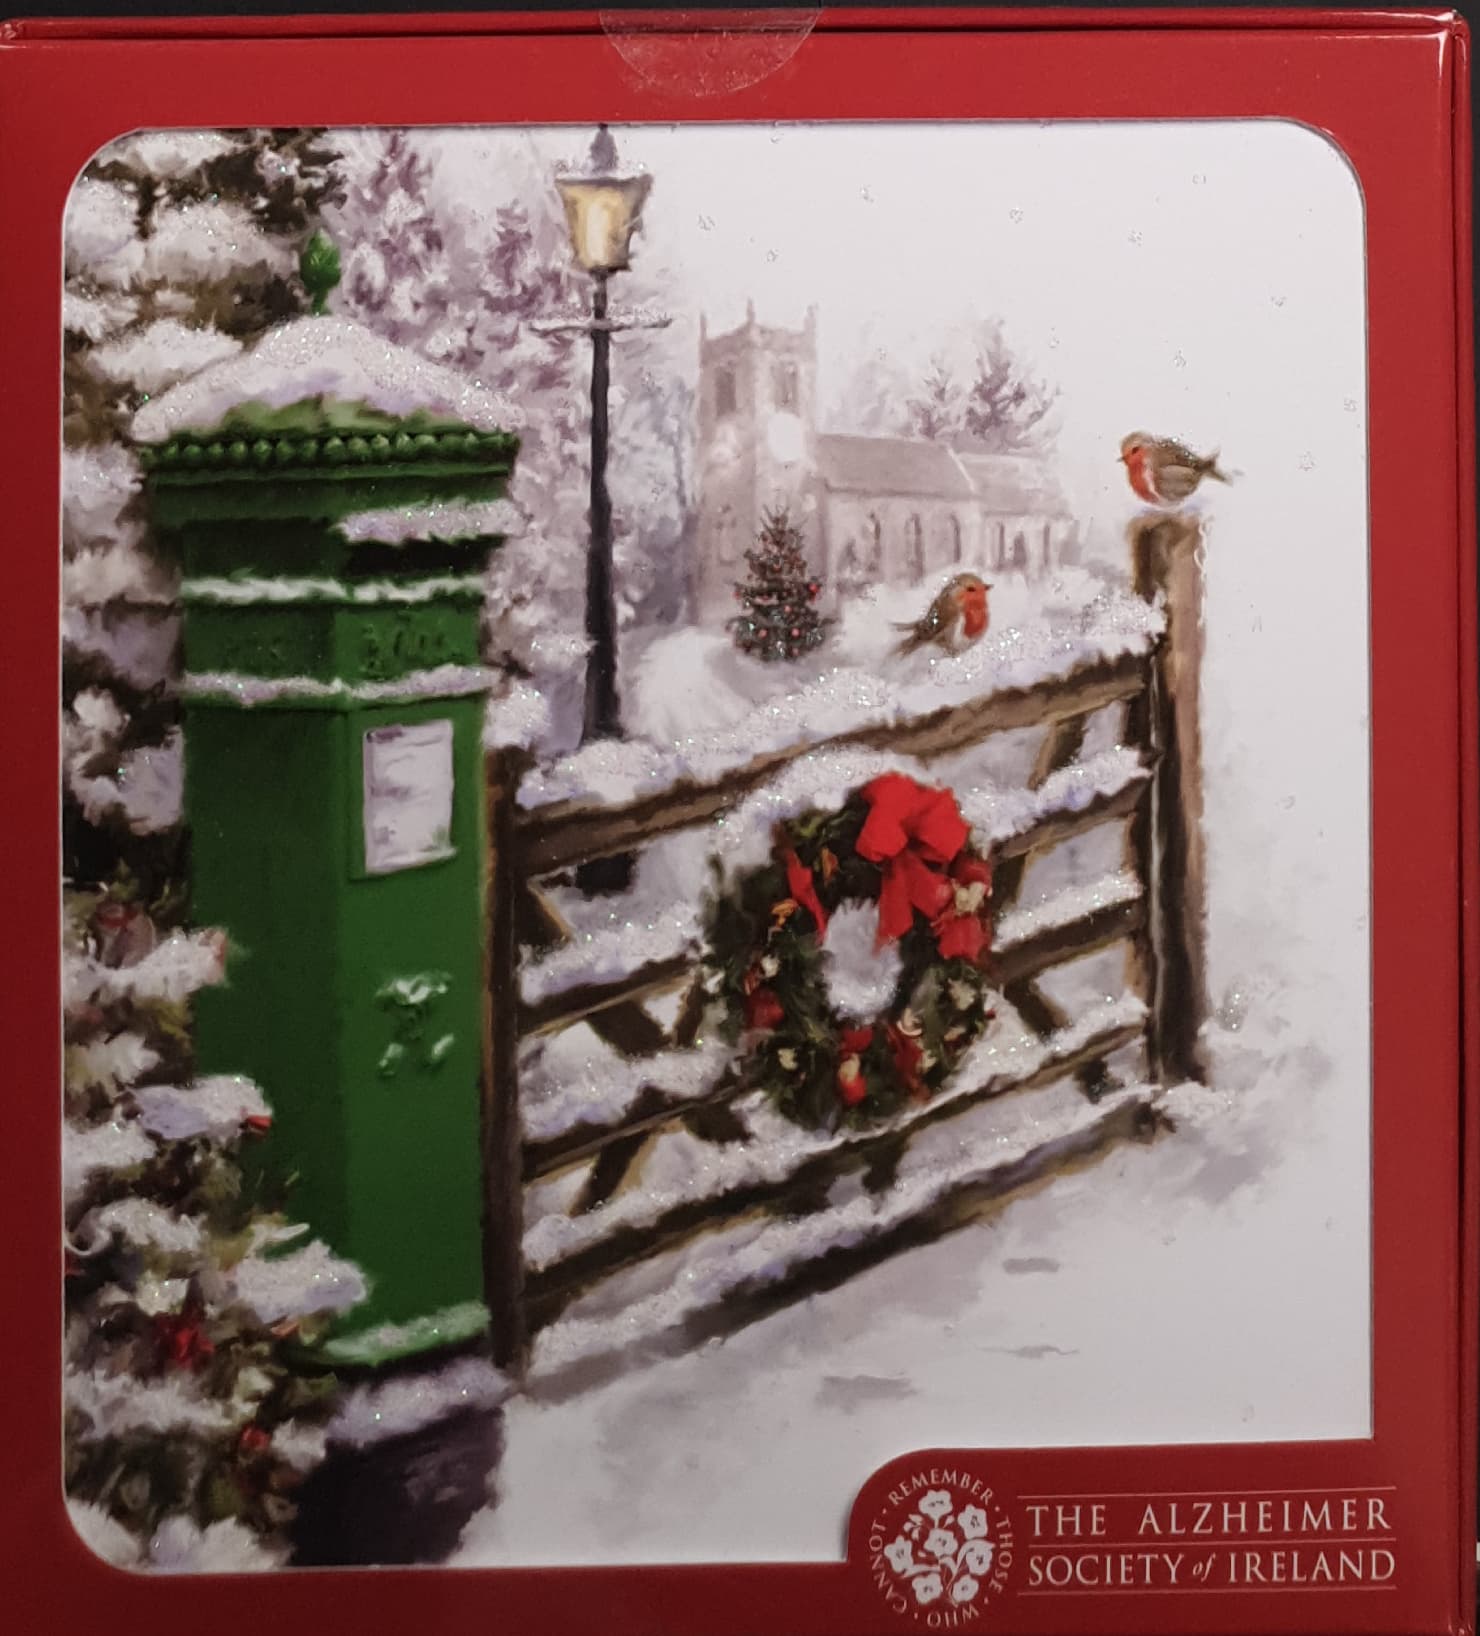 Charity Christmas Card (In Irish & English) - Box of 16 / Alzheimer Society of Ireland - Post Box & Snowy Gate